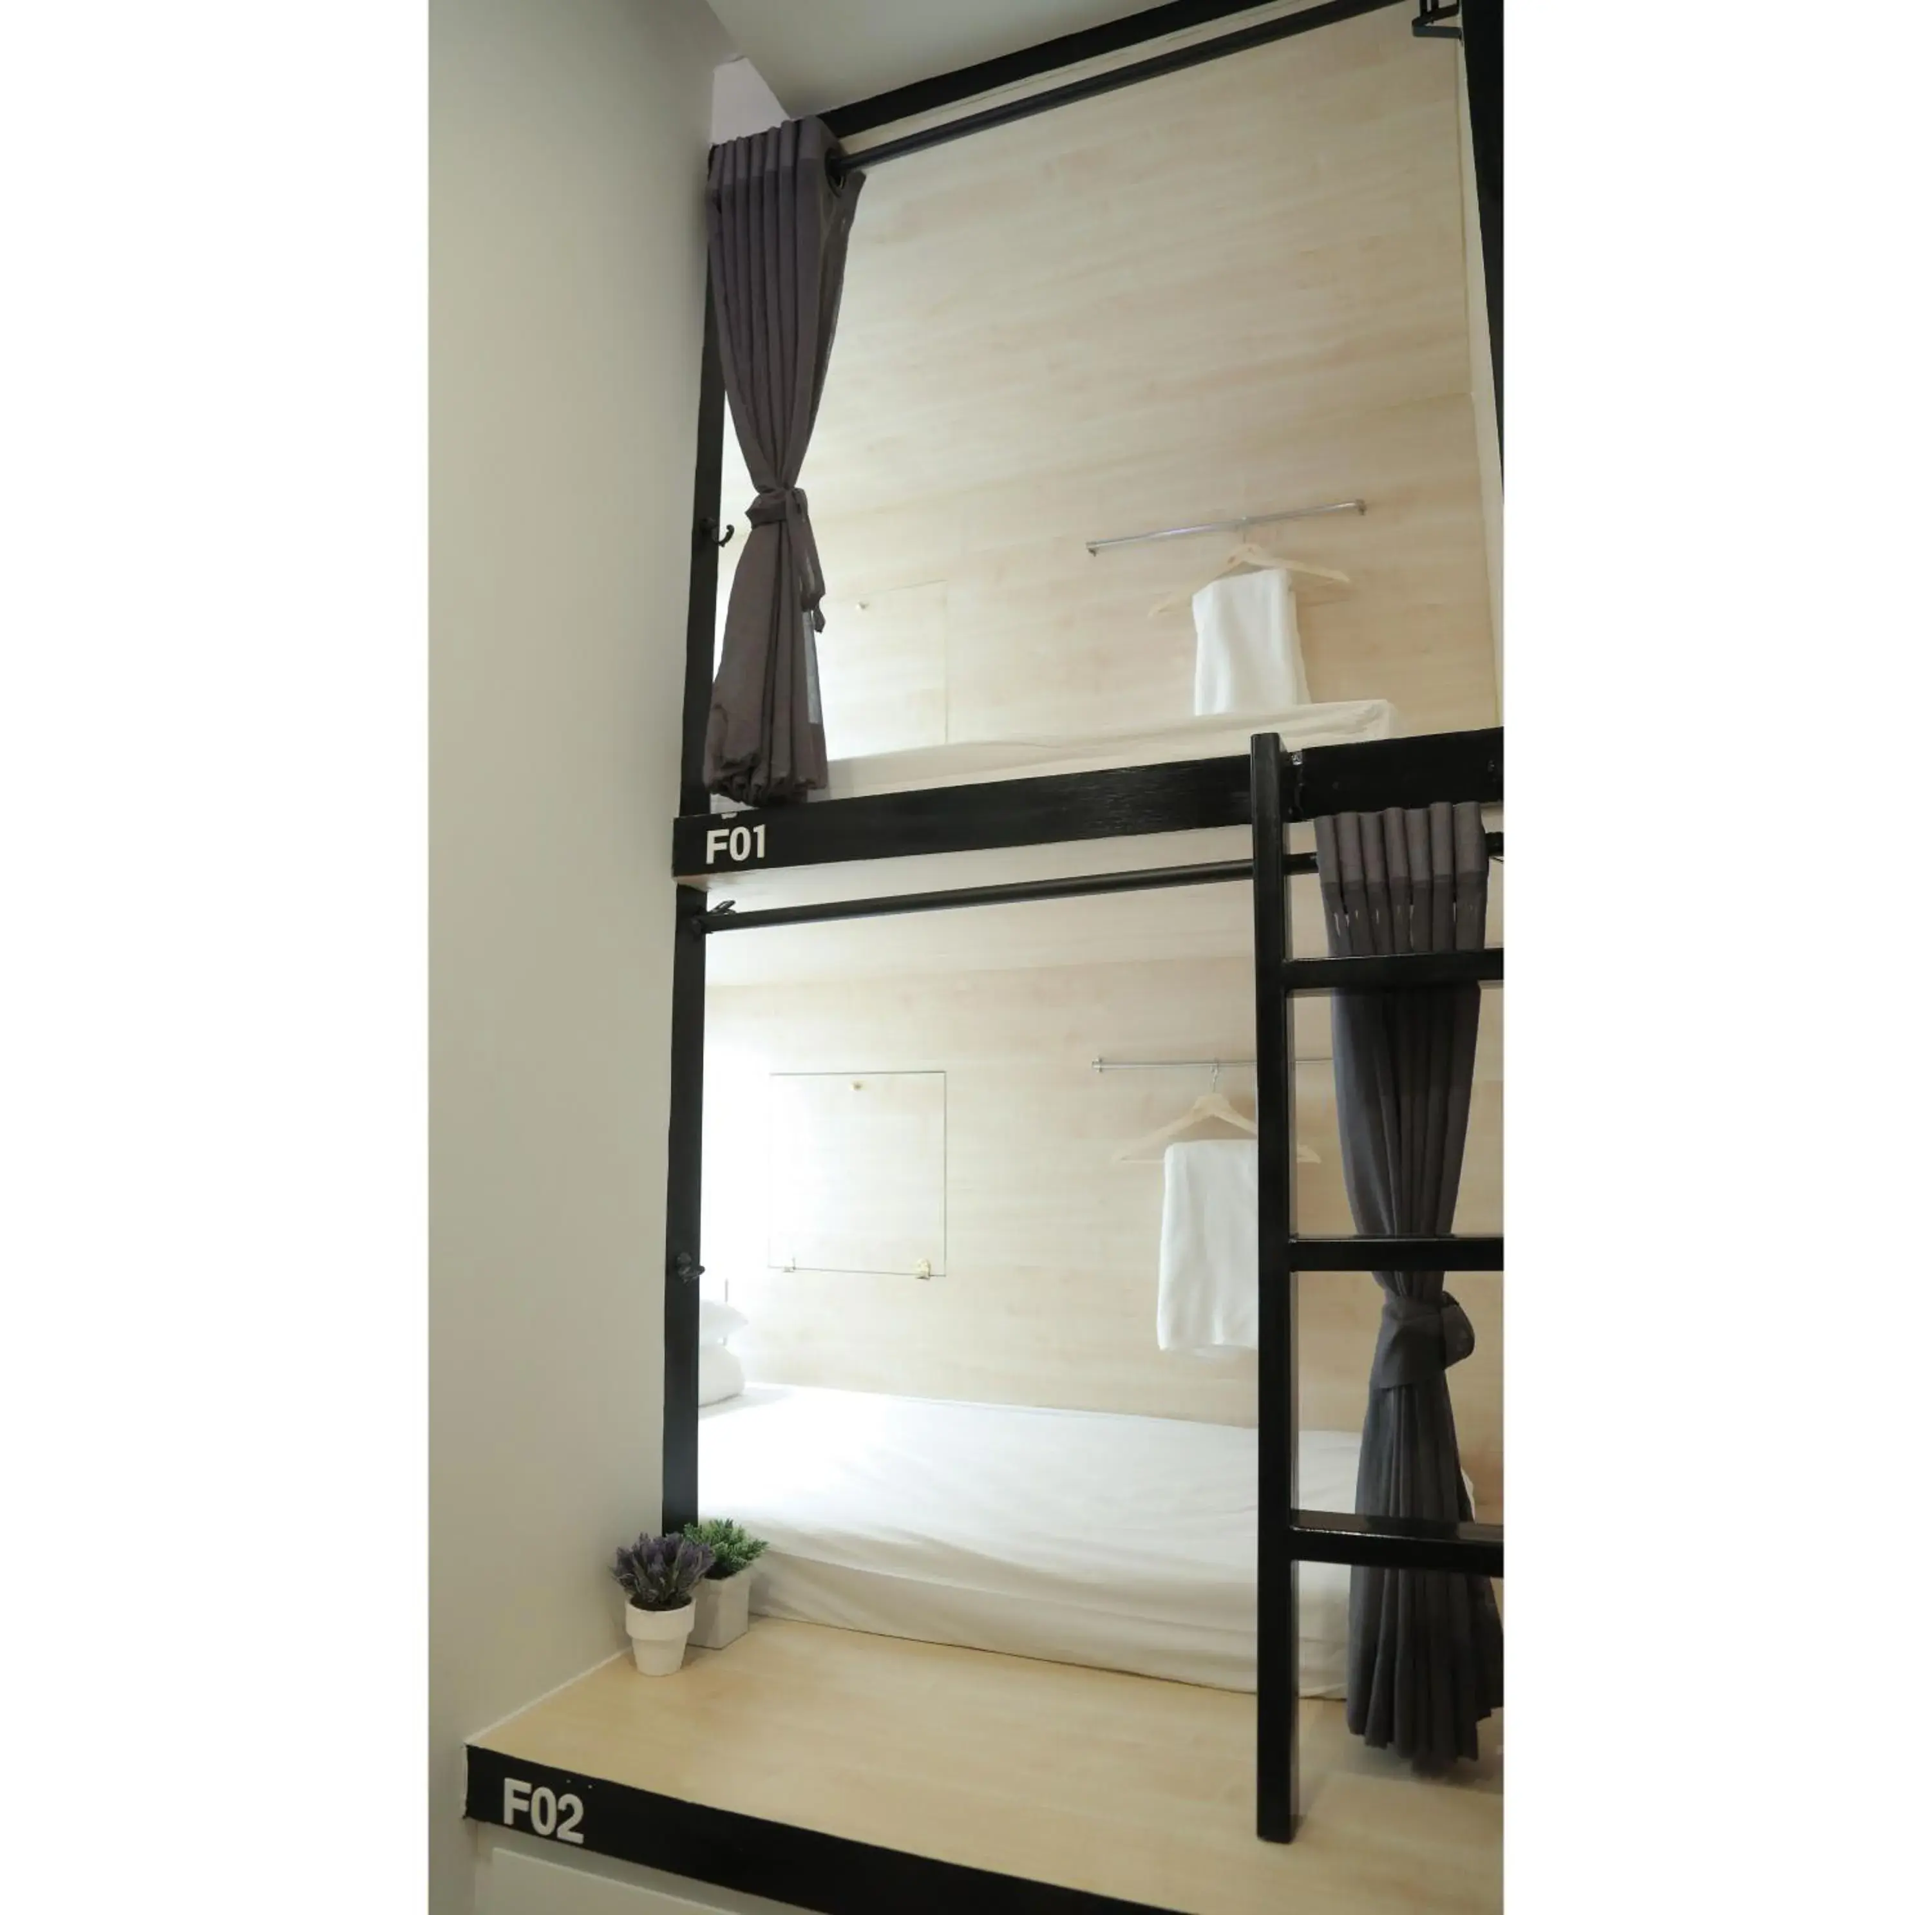 Bunk Bed in Lamurr Sukhumvit 41 Hostel